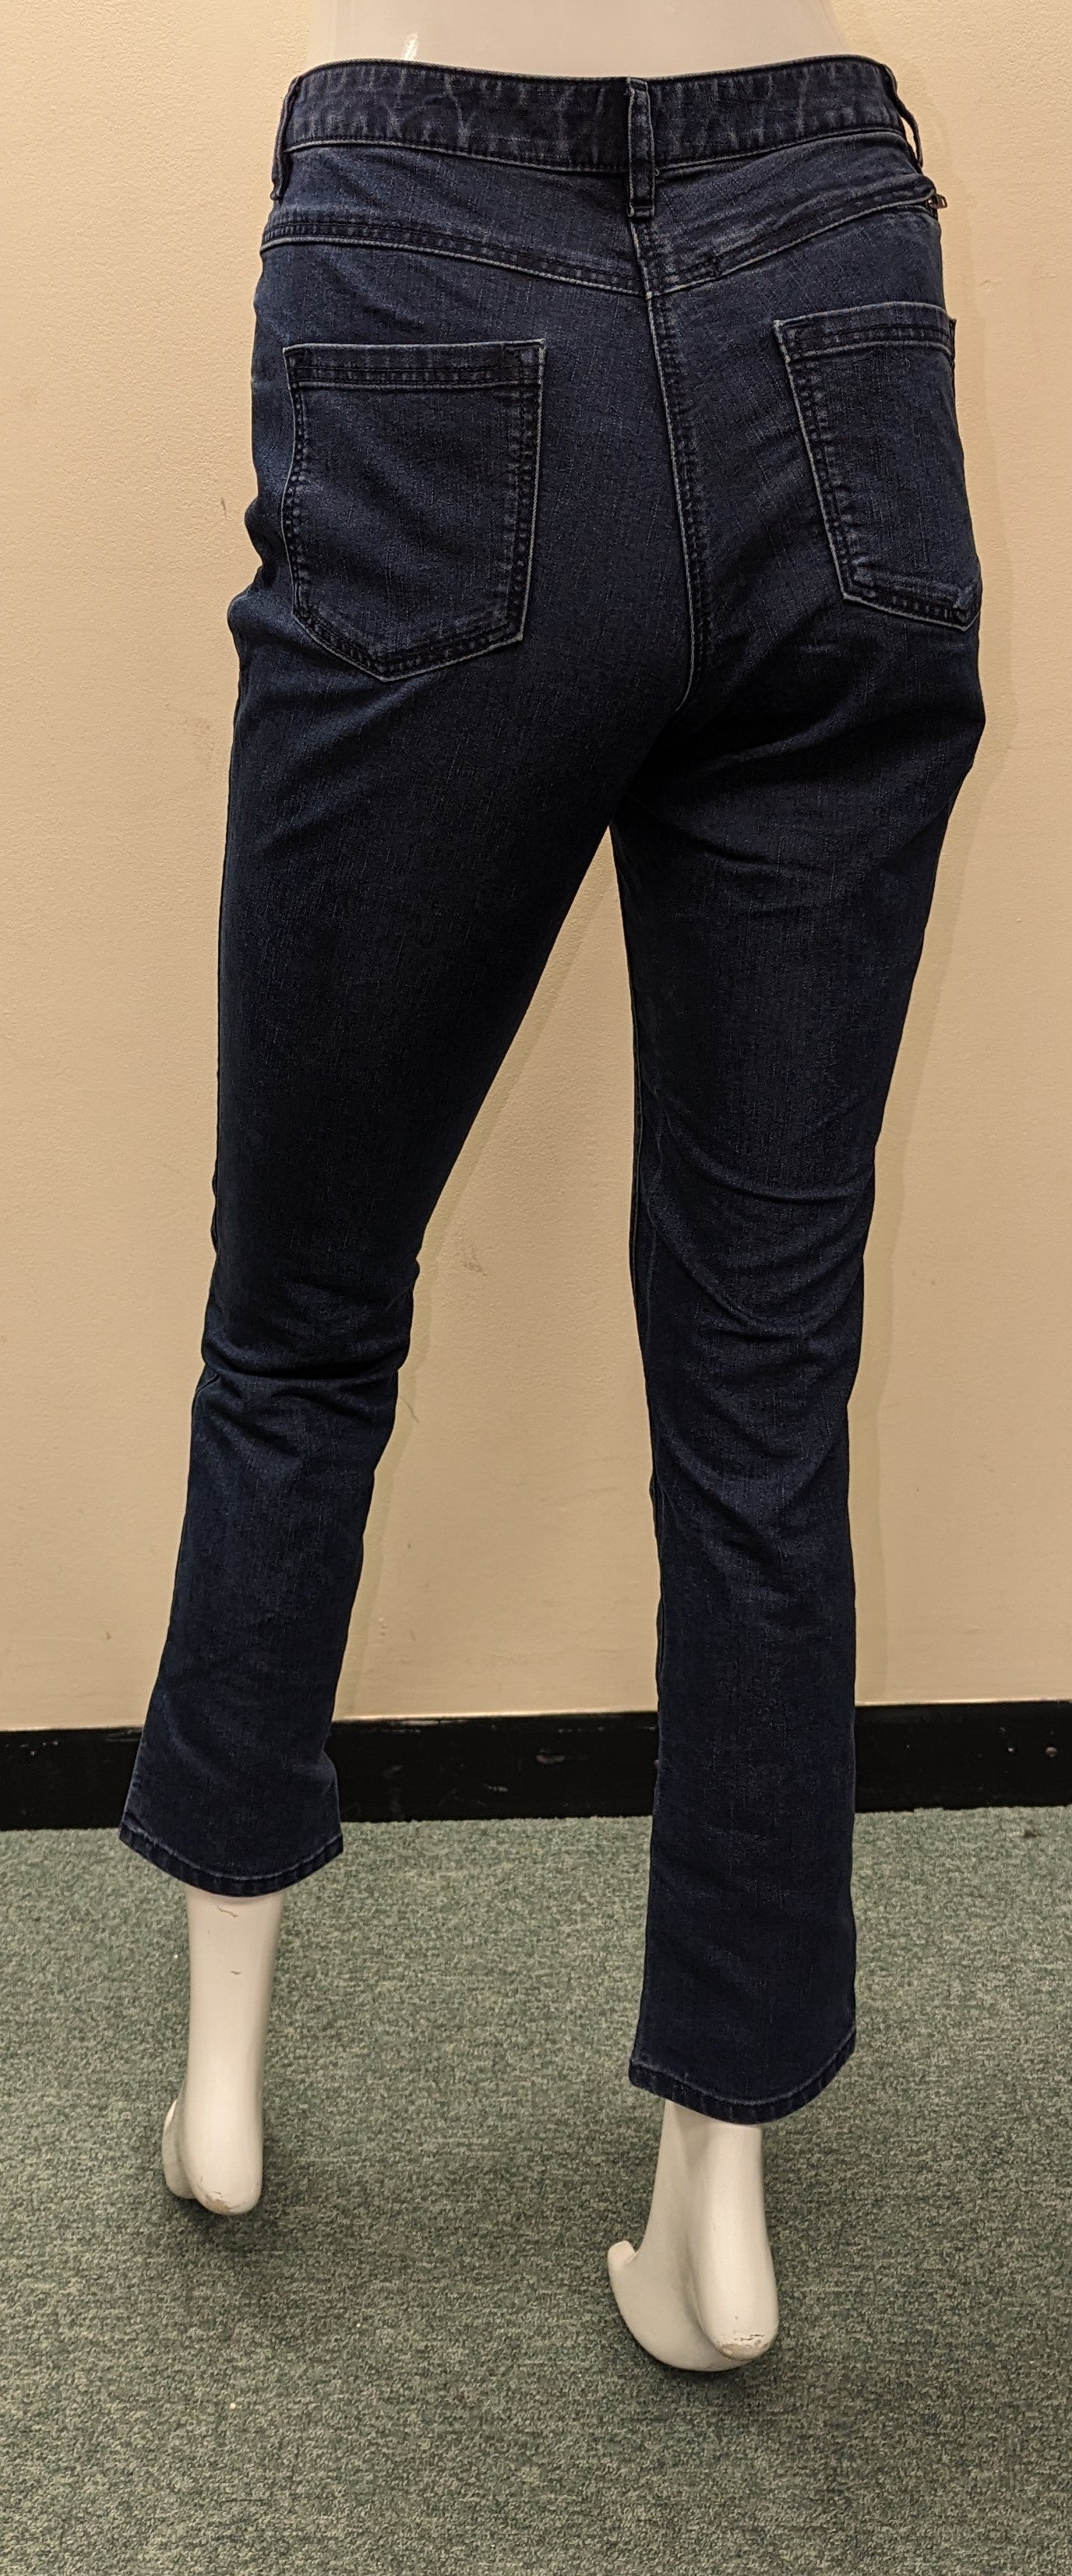 Ladies Rohan Jeans - Size 10R